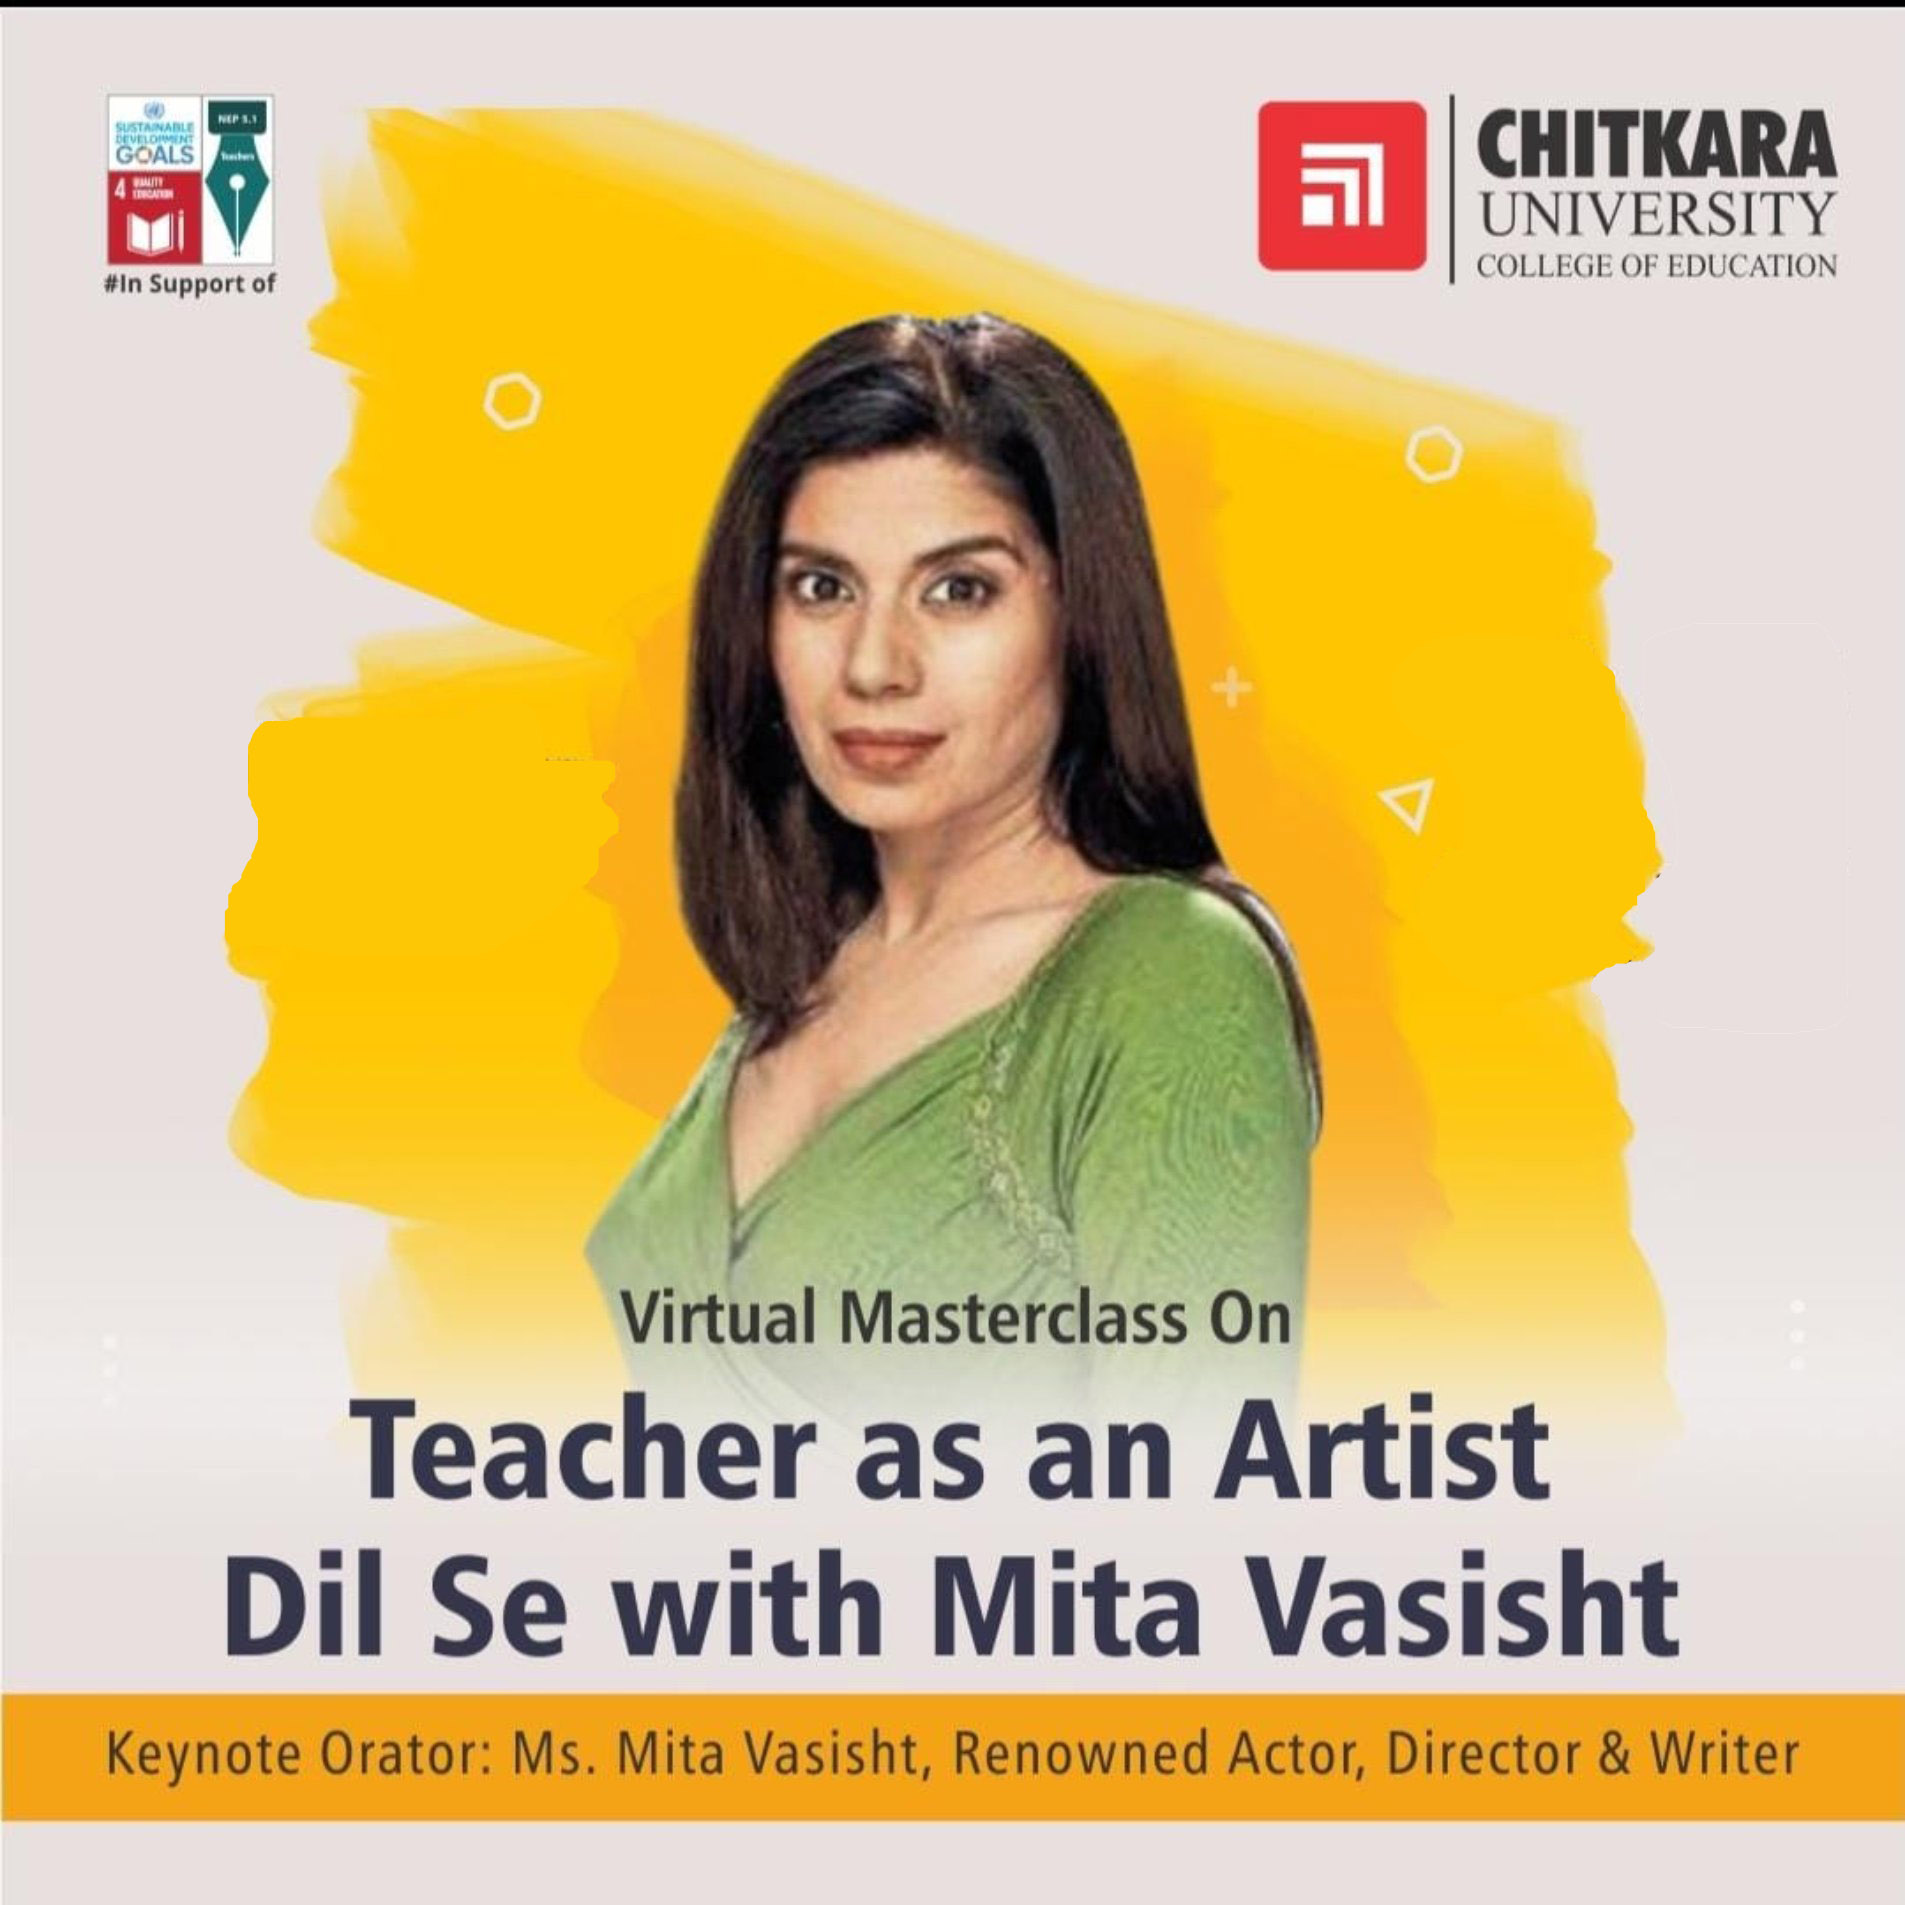 Actress Mita Vasisht addresses budding teachers, faculty of Chitkara